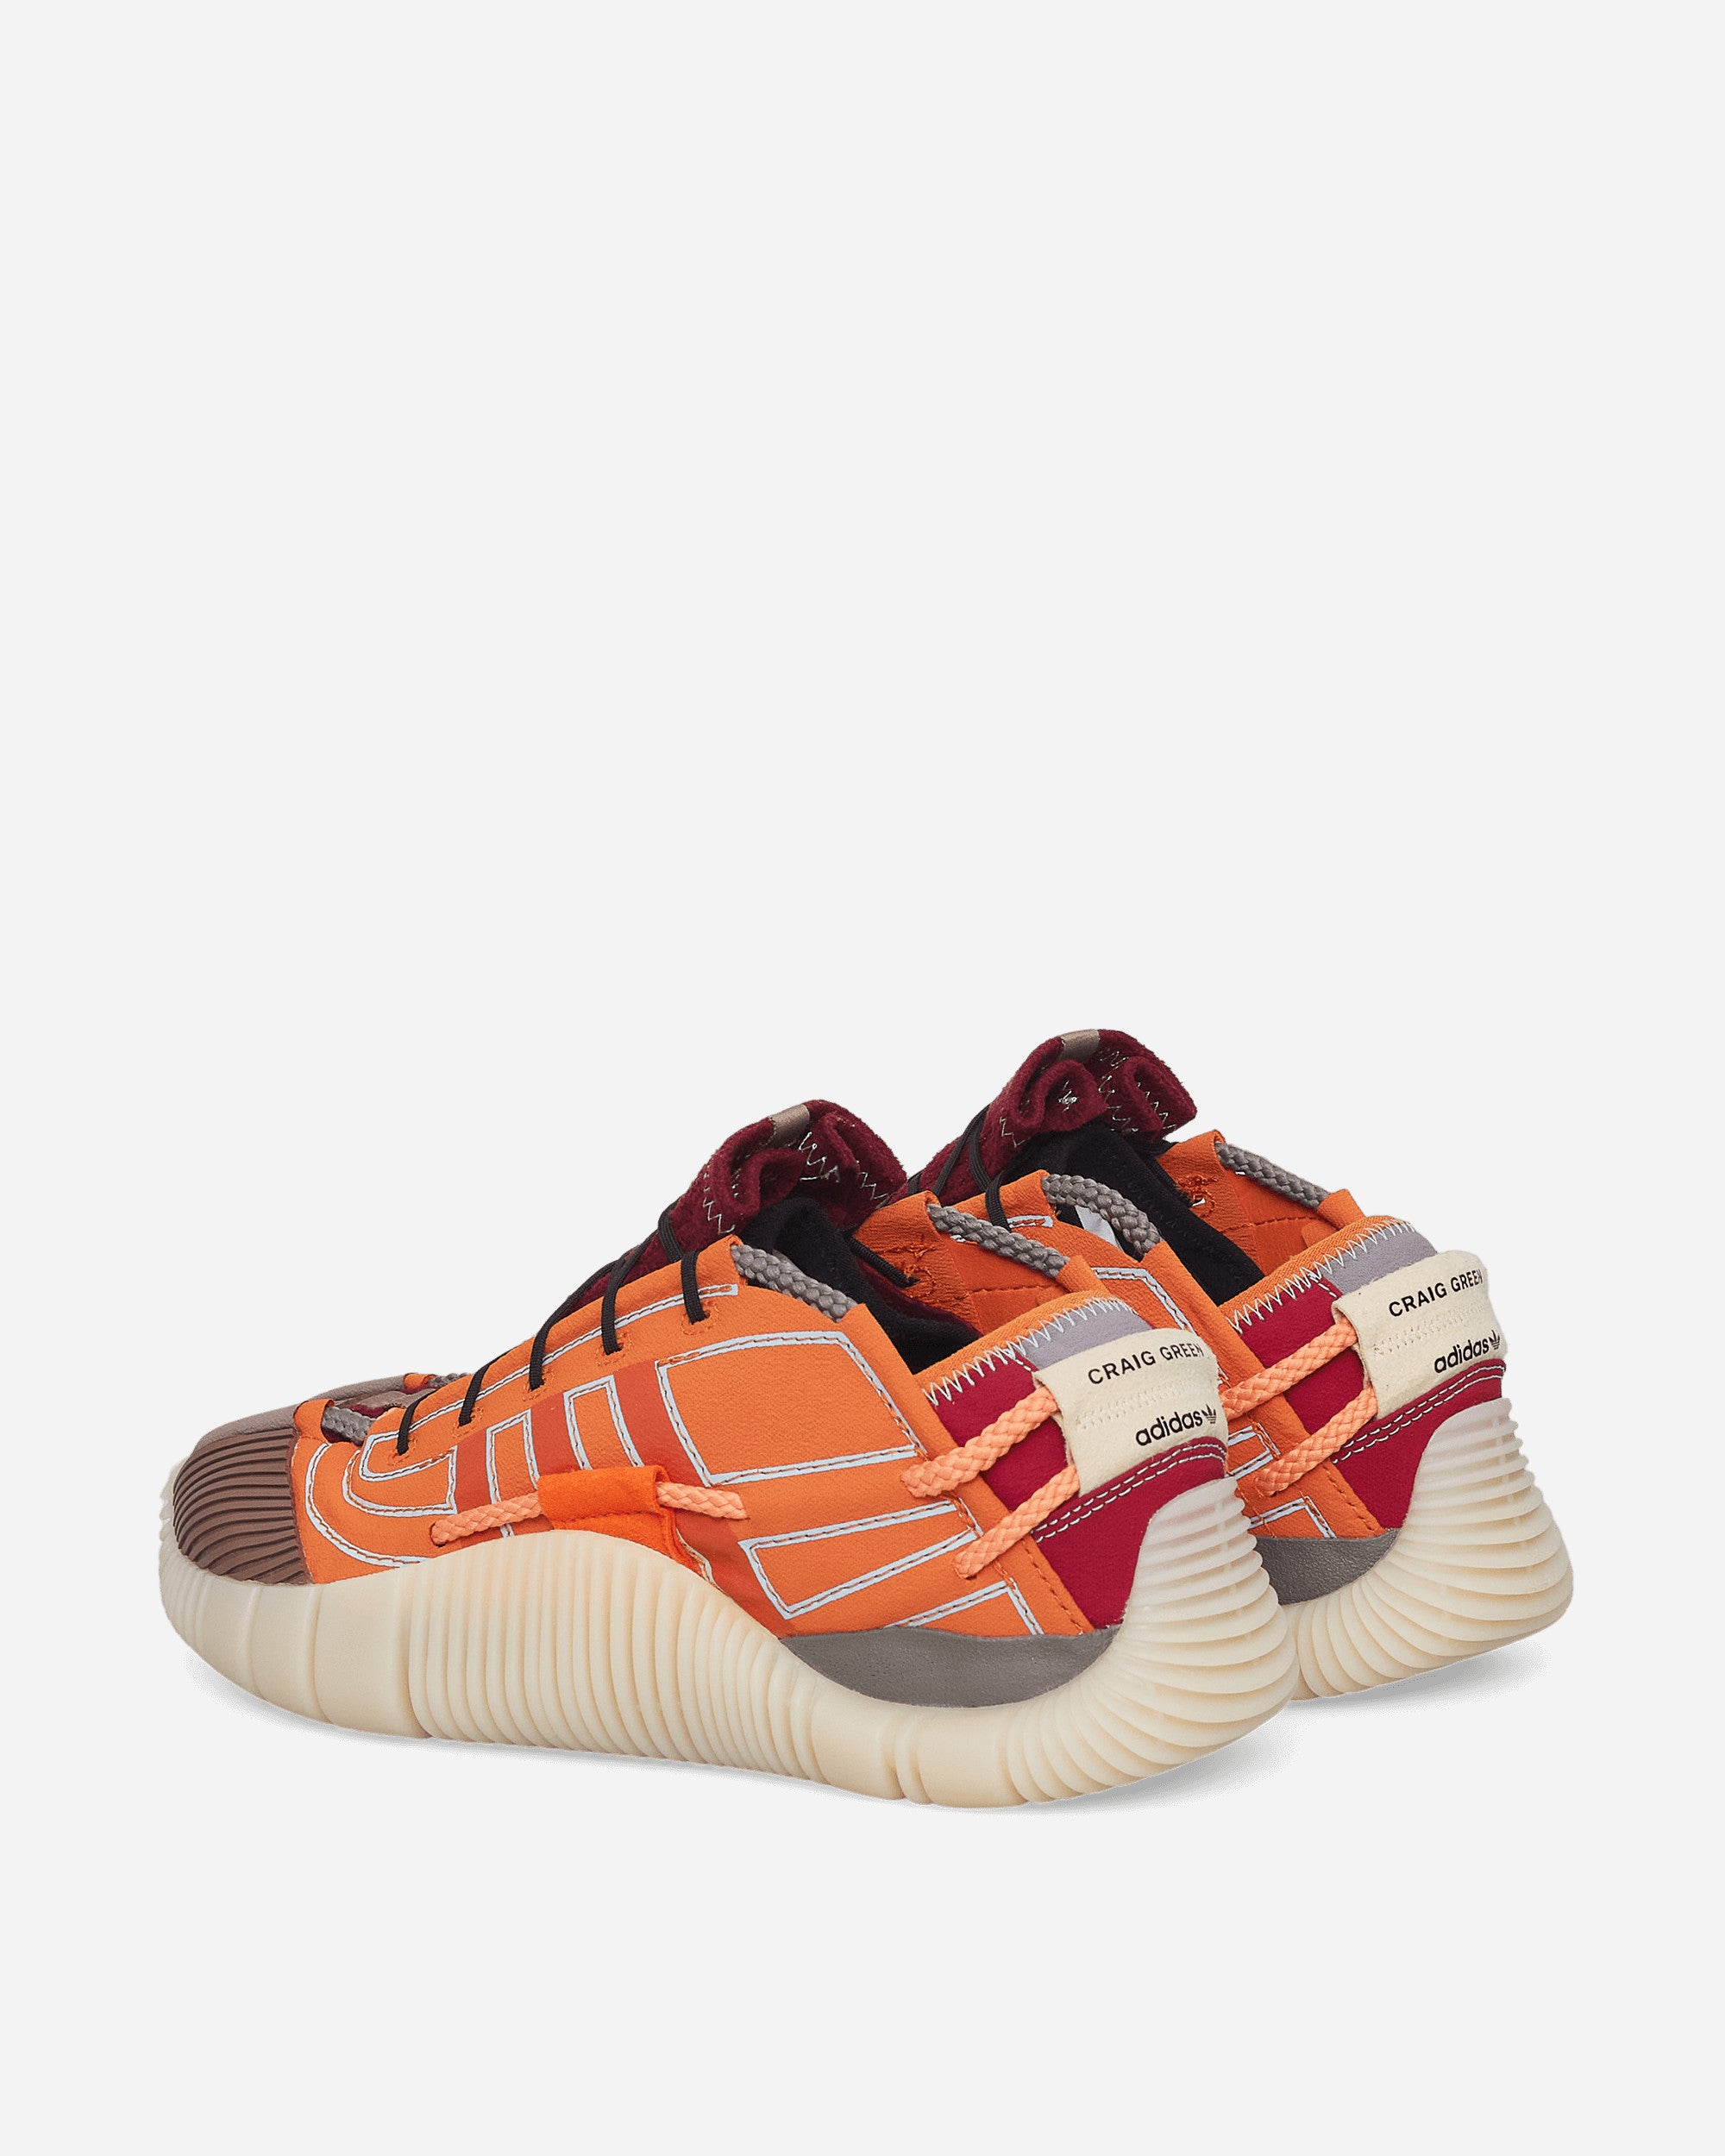 adidas Consortium Cg Scuba Phormar Tactile Orange/Glowblue Sneakers Low GW5858 001